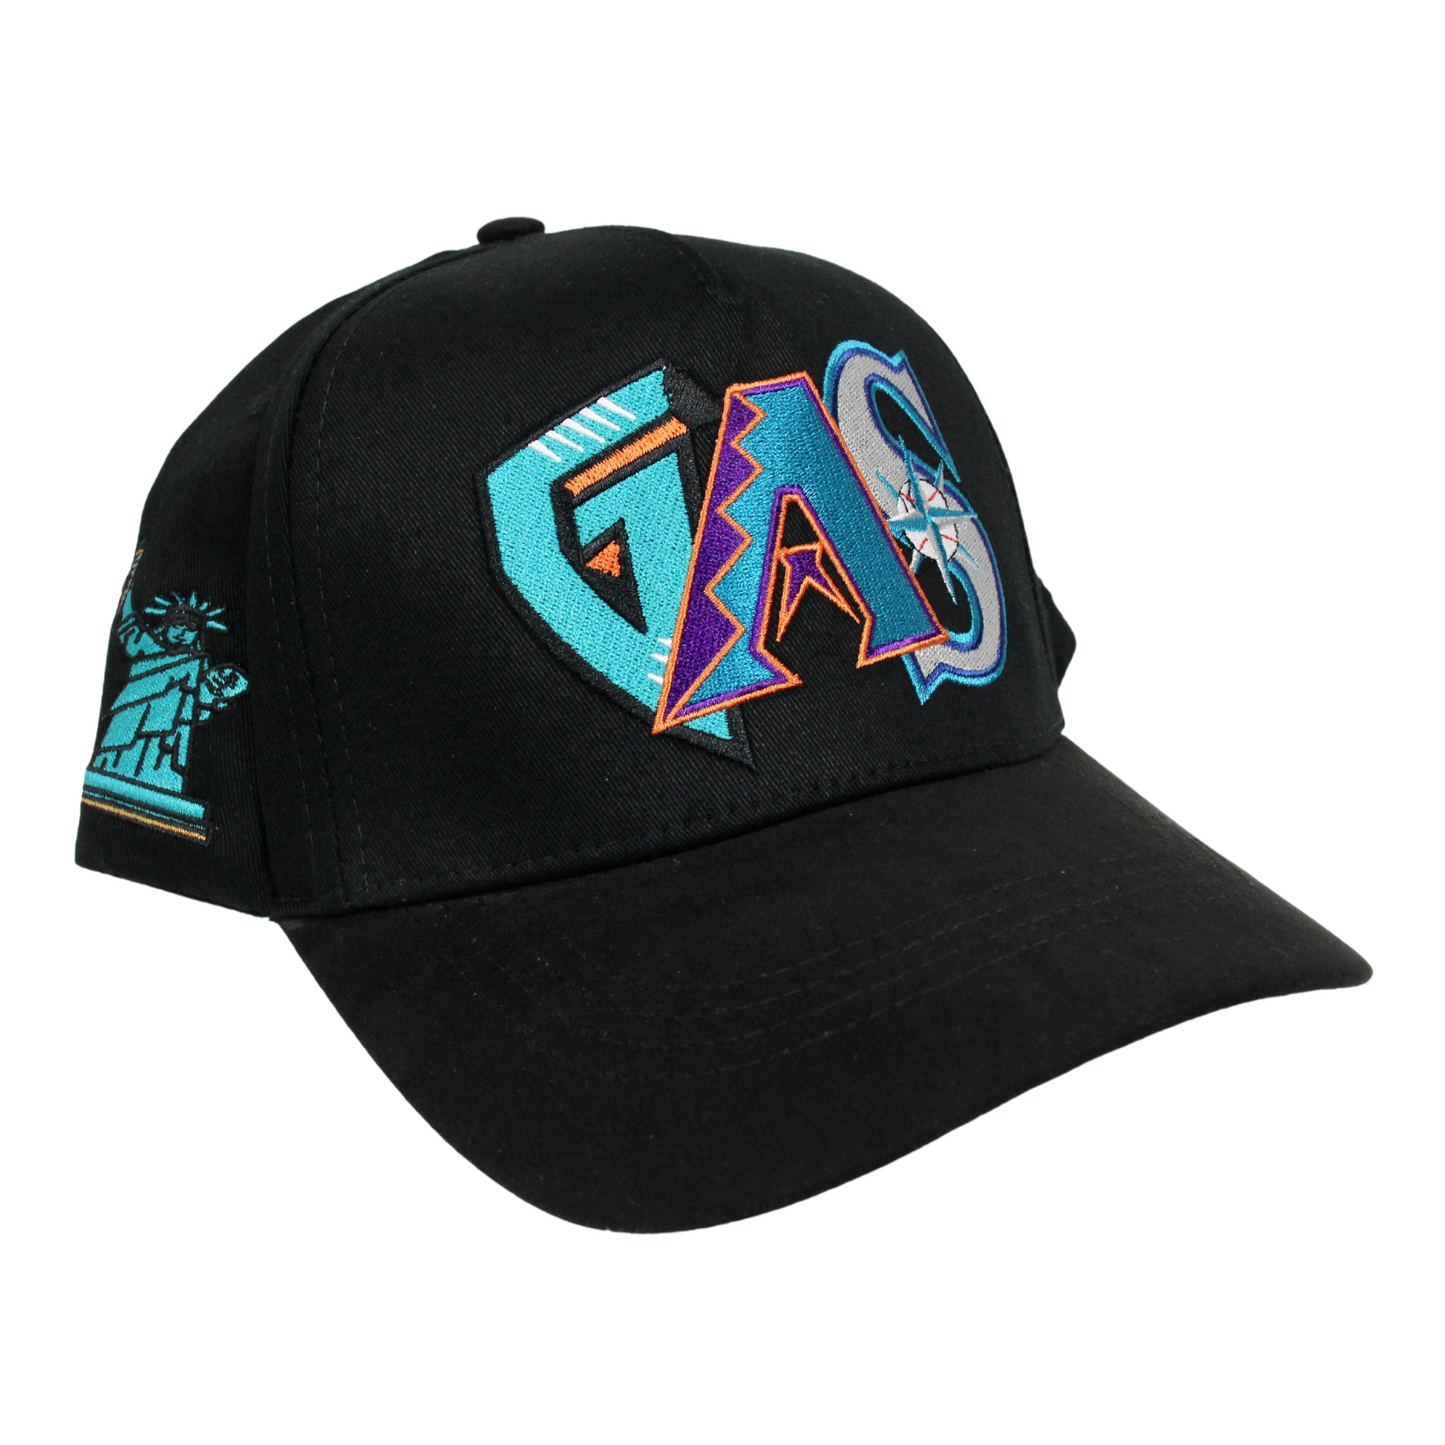 Gas NYC "Big Leagues" Hat